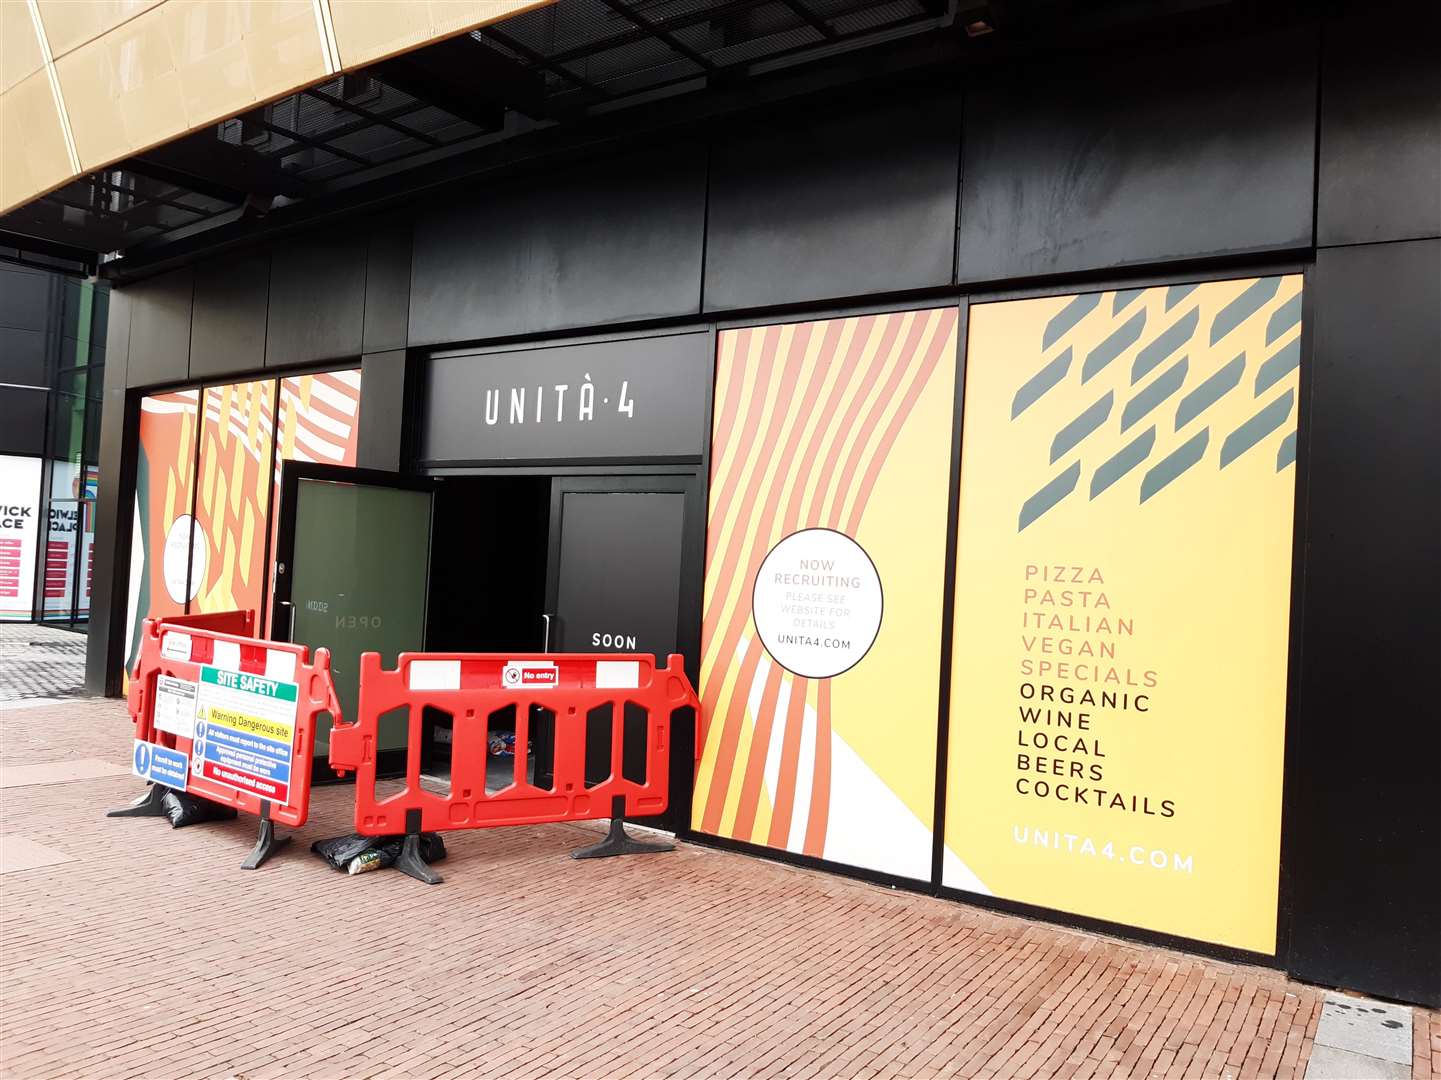 Unita 4 is set to fill a spot underneath the cinema